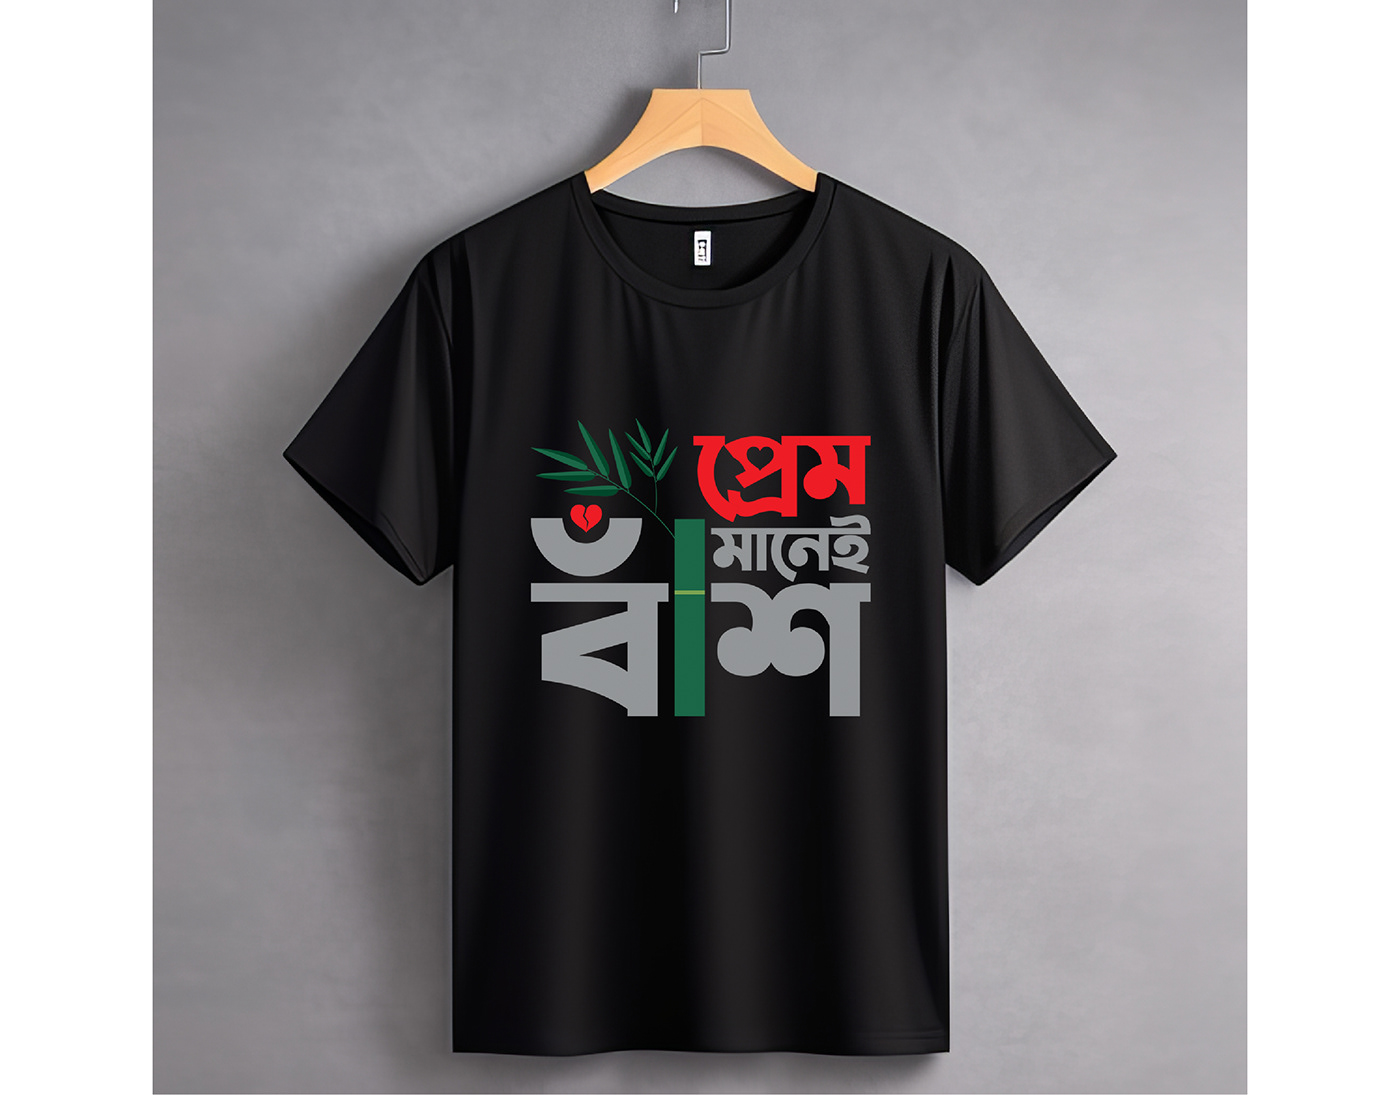 t-shirt tshirts T-Shirt Design Bangla t-shirt Simple T-Shirt Design Typography T-shirt funny t-shirt graphic design  Bangla T-shirt Design costom t-shirt design